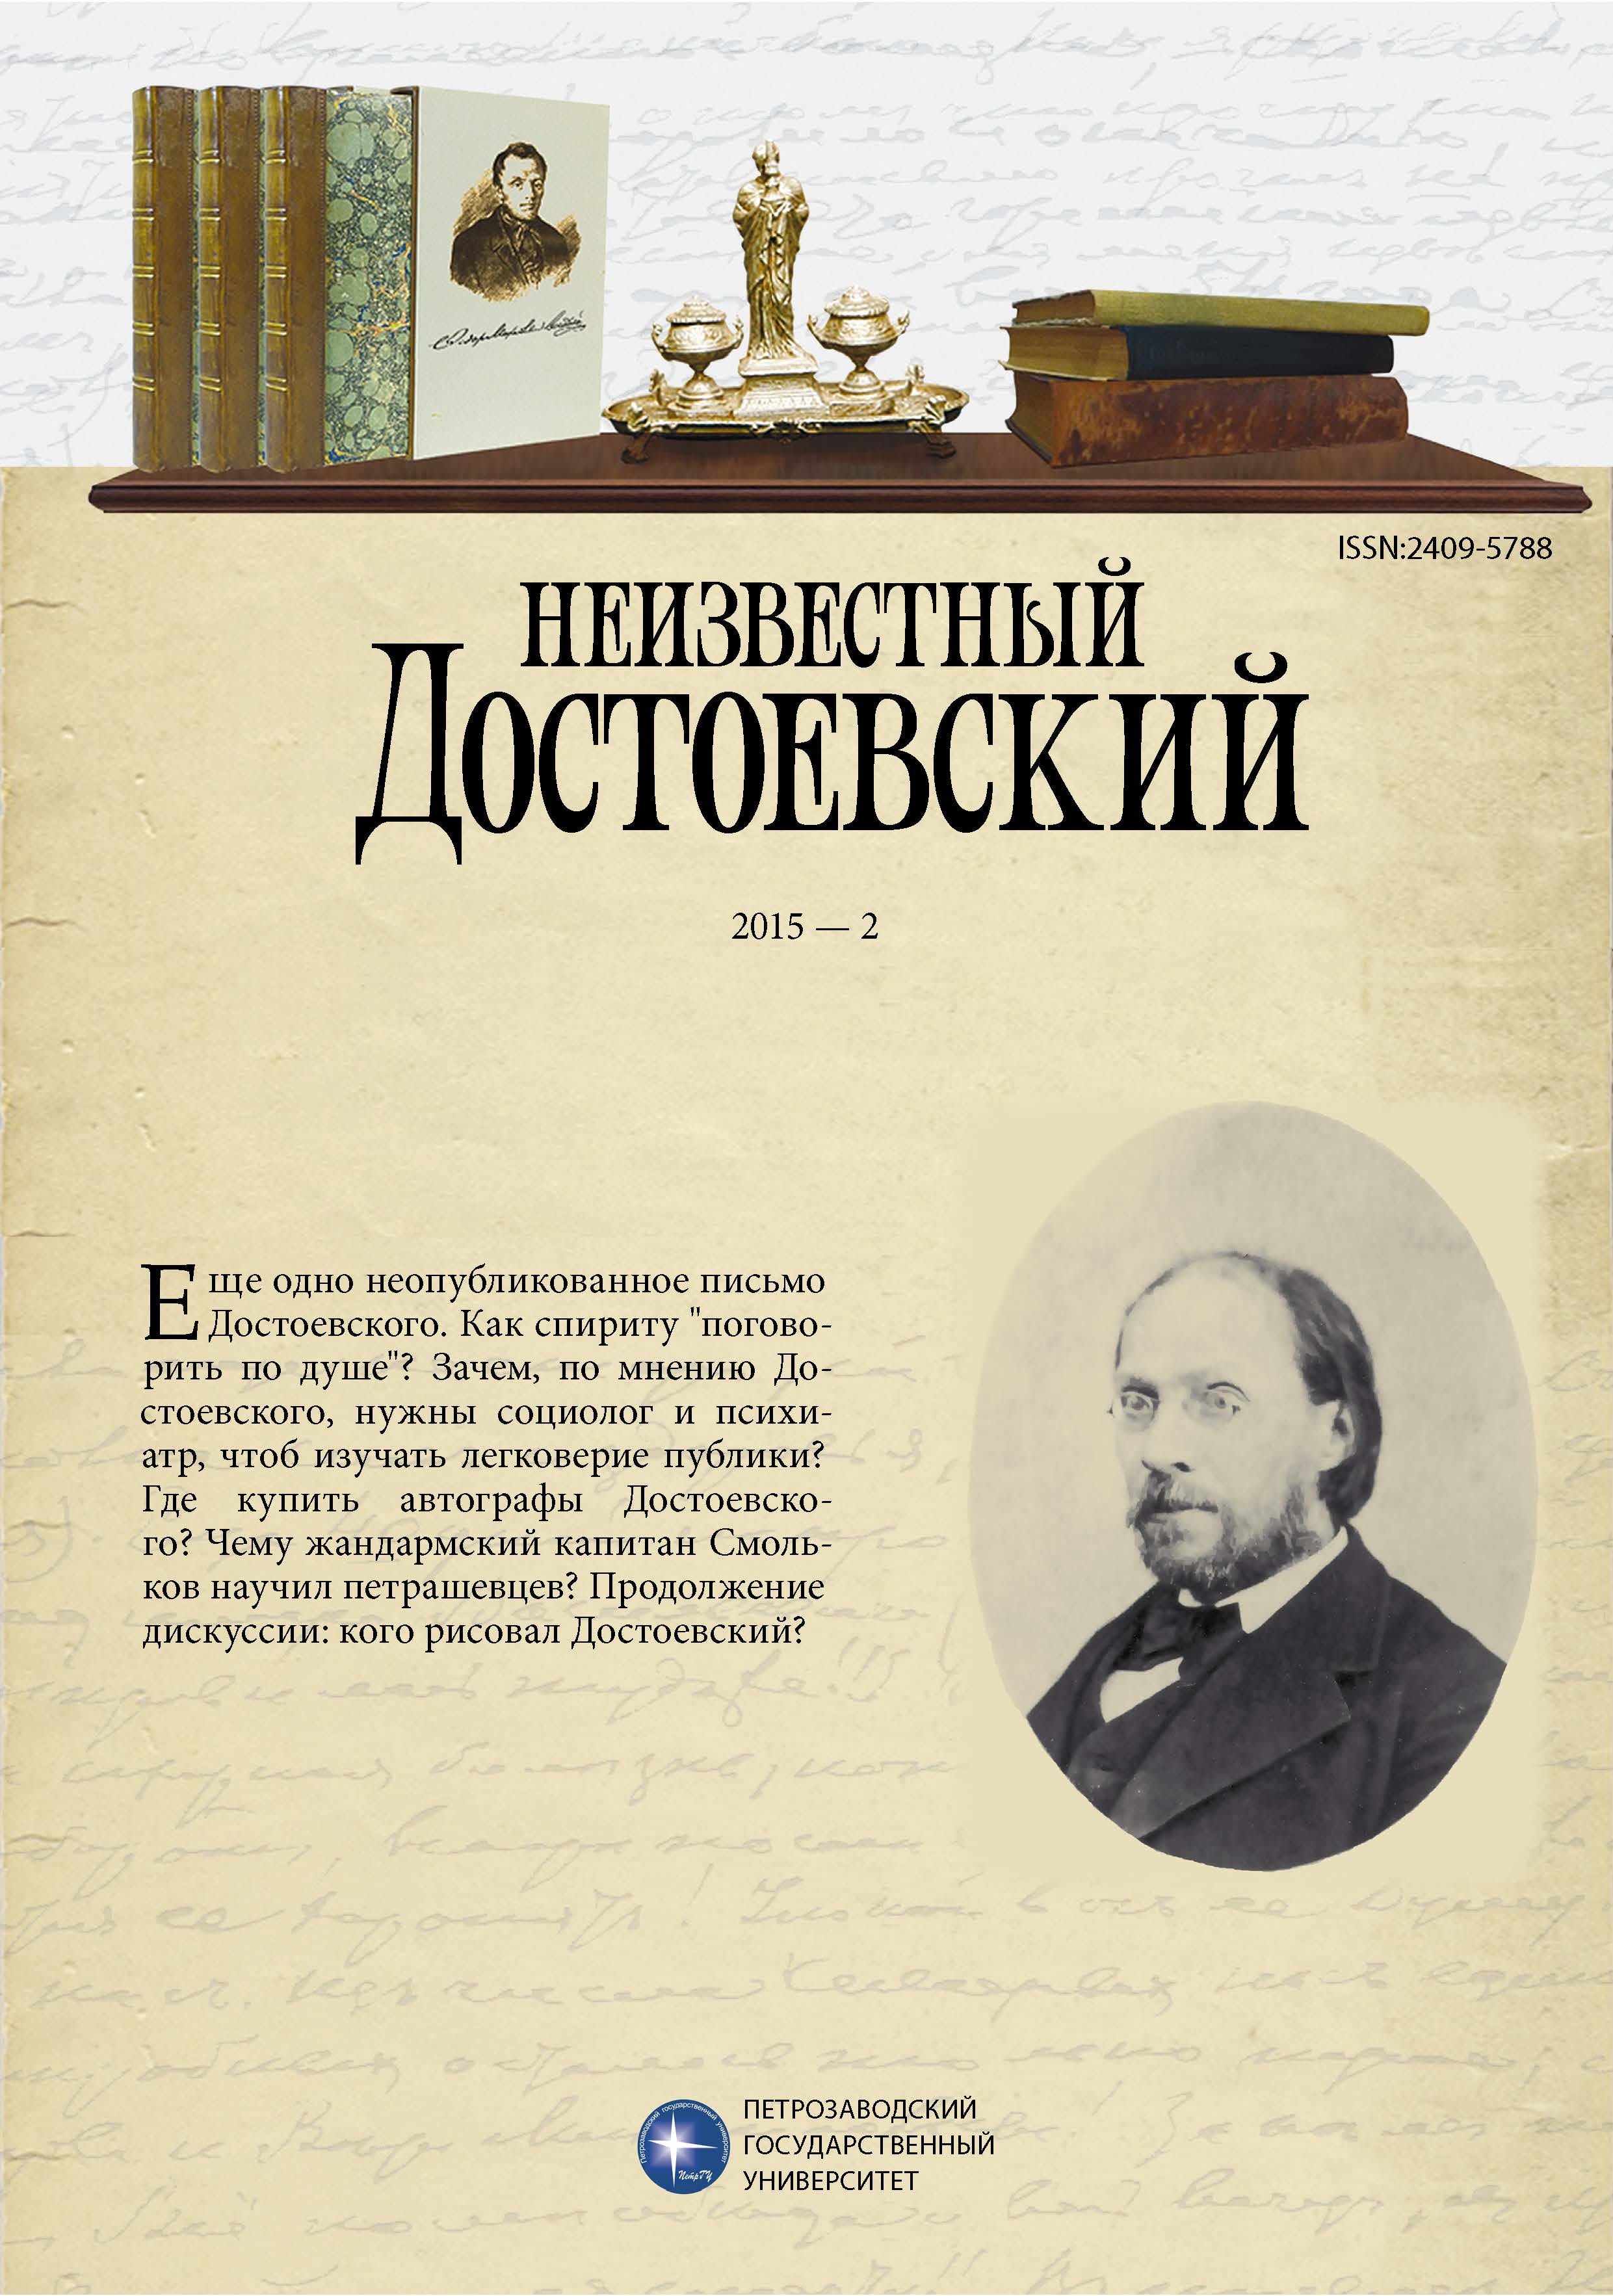 N. D. Fonvizina's Letter of 8 November 1853 to F. M. Dostoevsky Cover Image